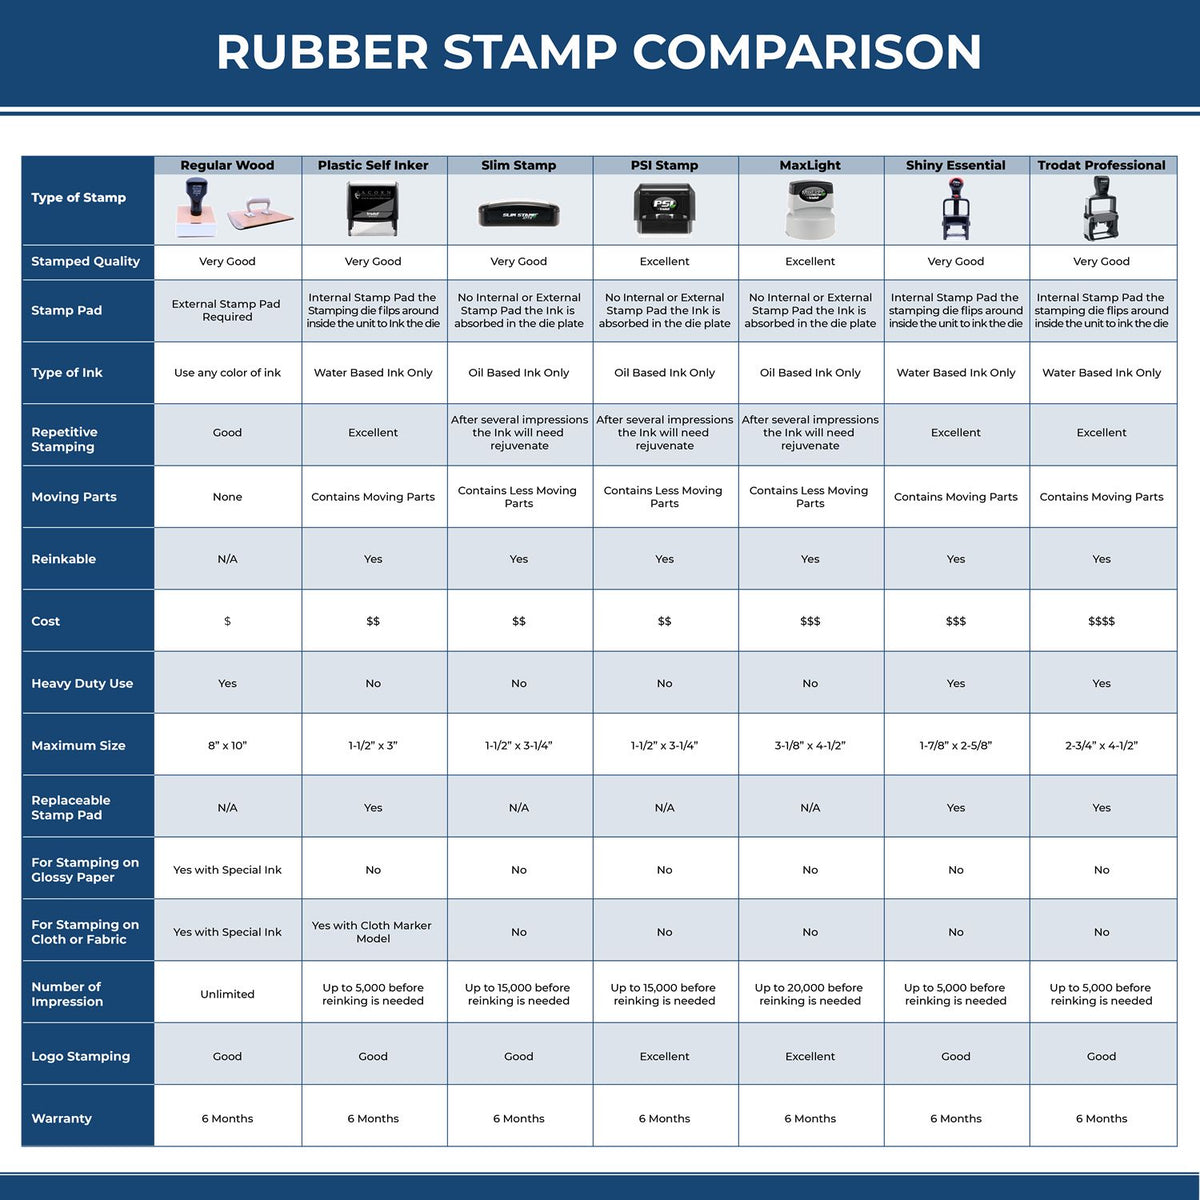 Red Credit Rubber Stamp 4017R Rubber Stamp Comparison